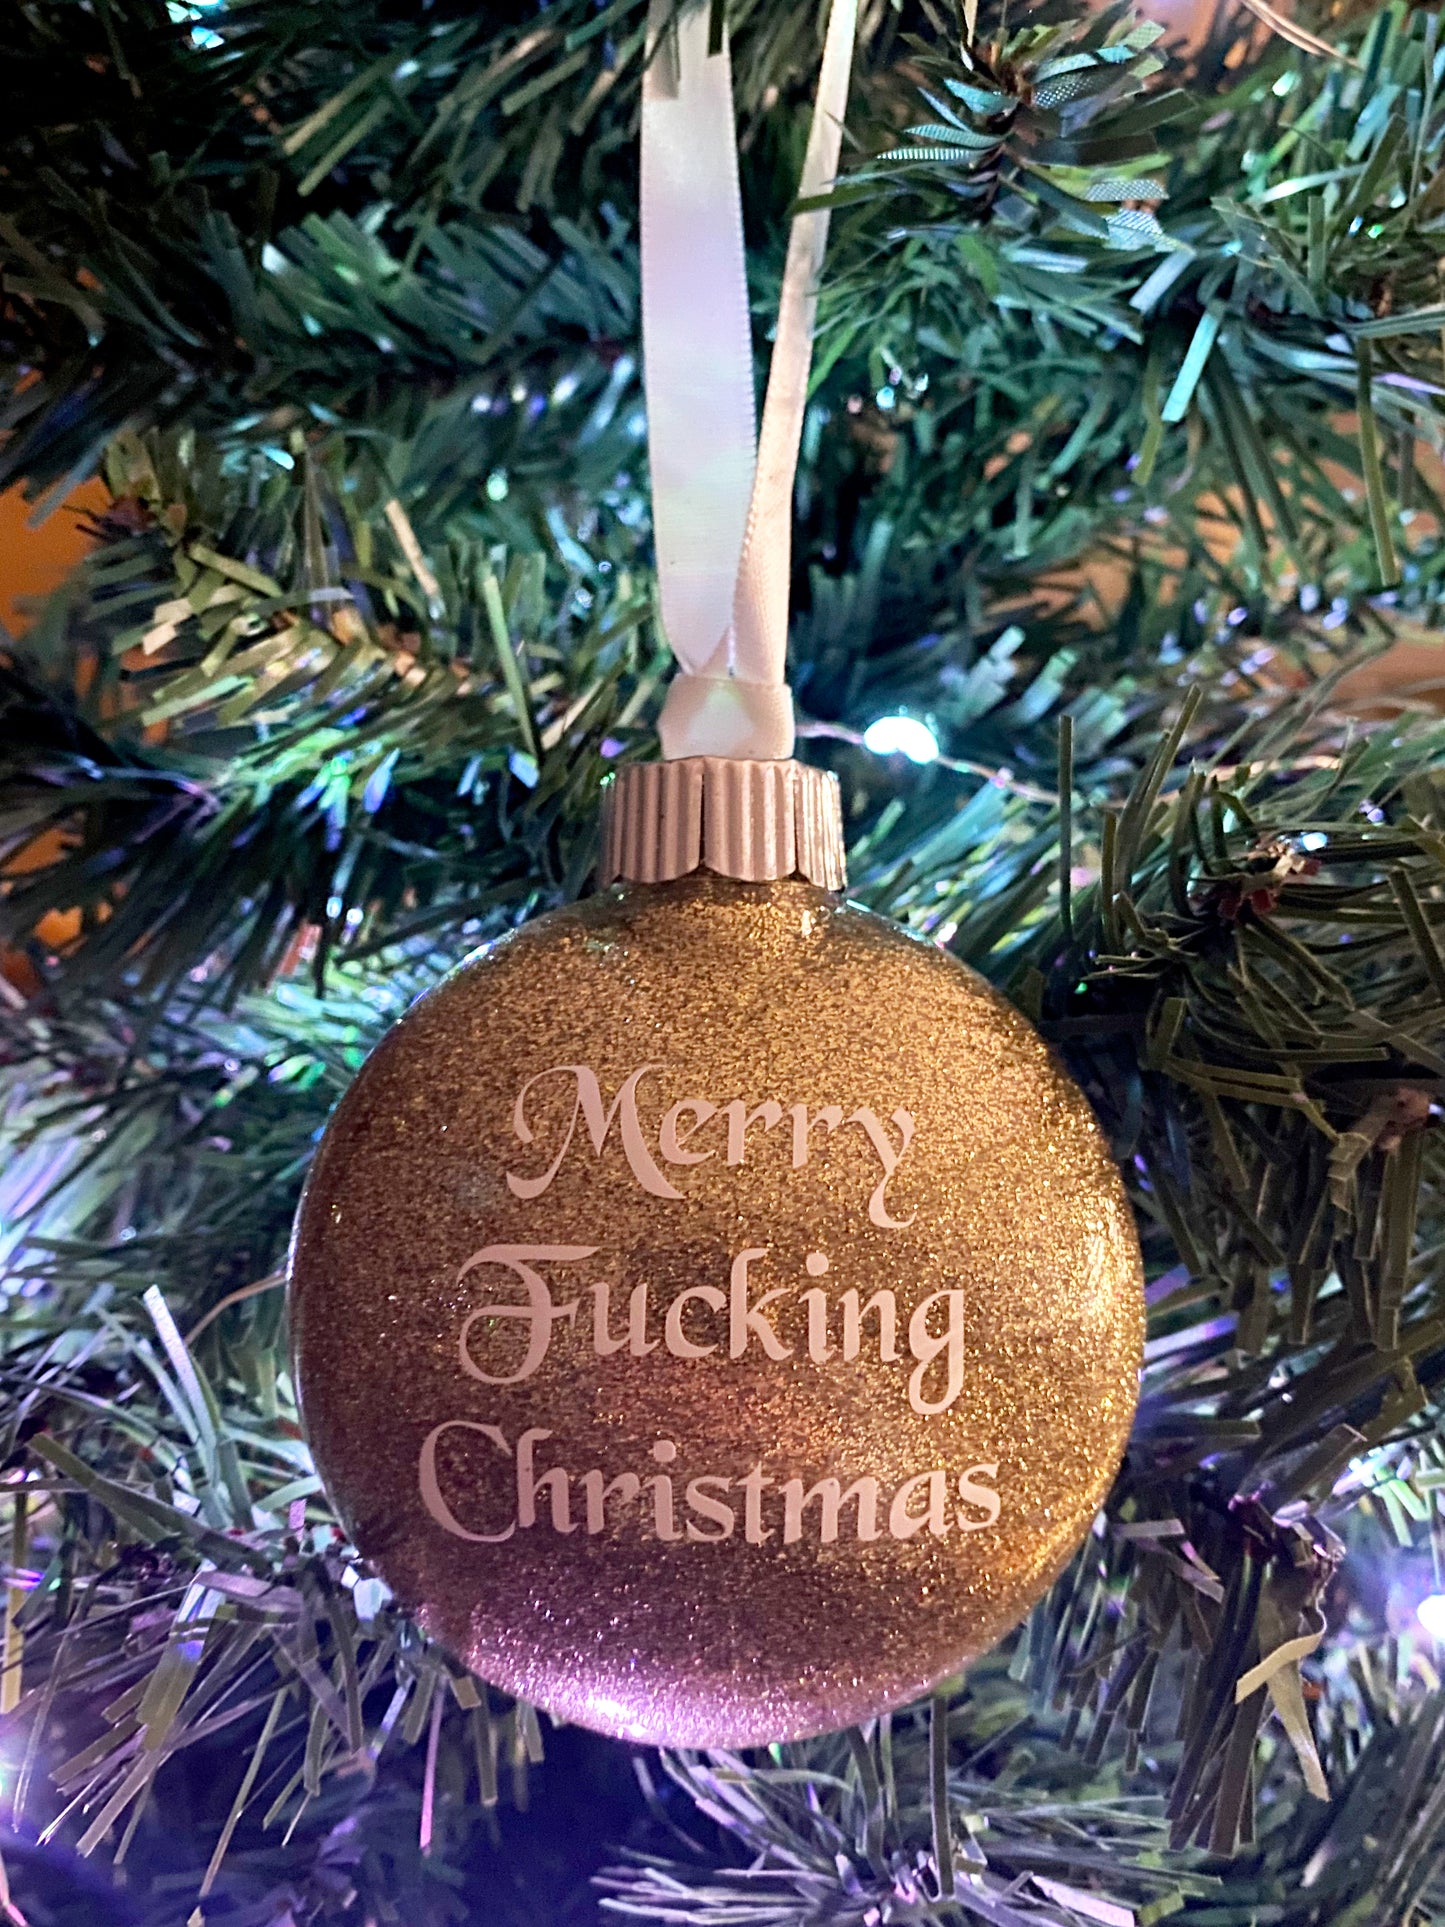 Merry Fucking Christmas Ornament